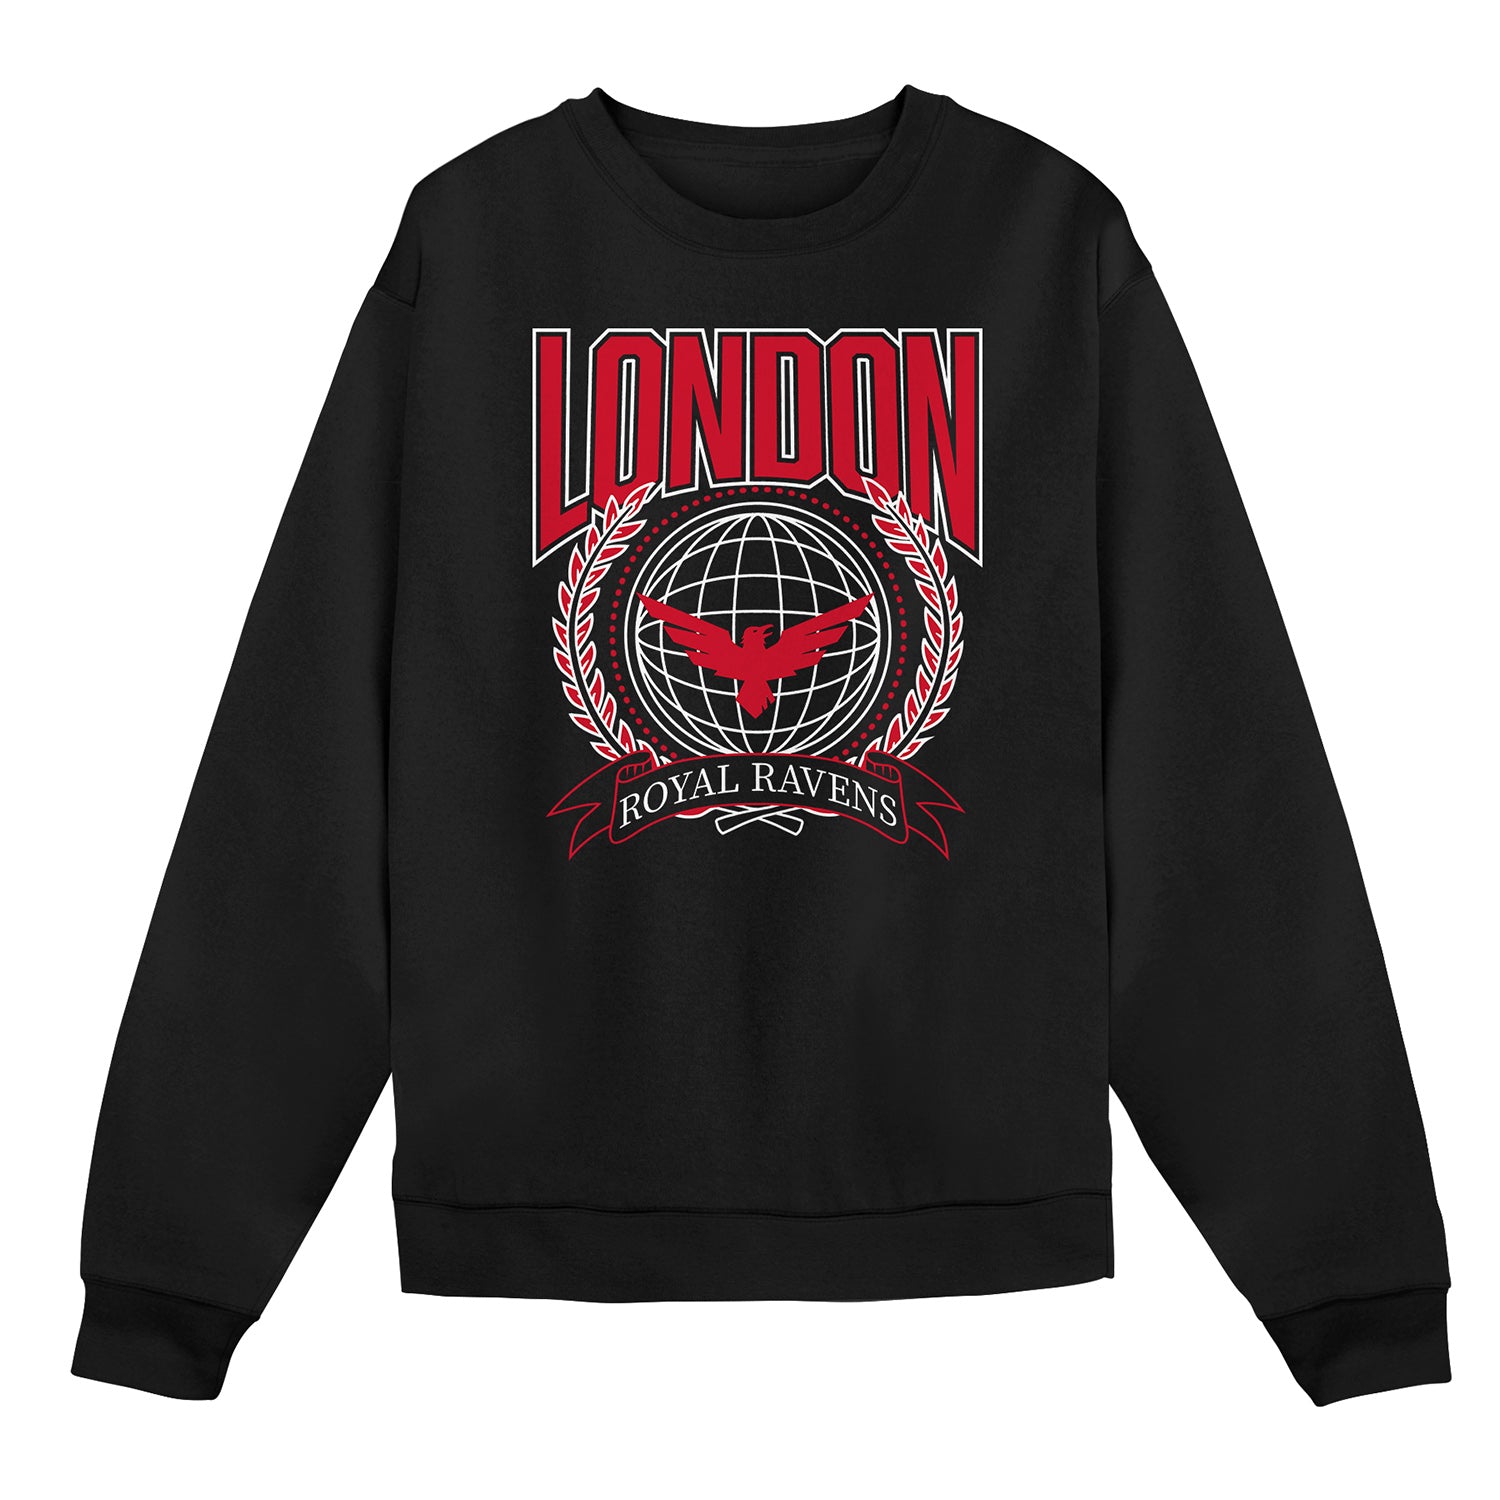 London Royal Ravens Crest Black Crewneck Sweatshirt